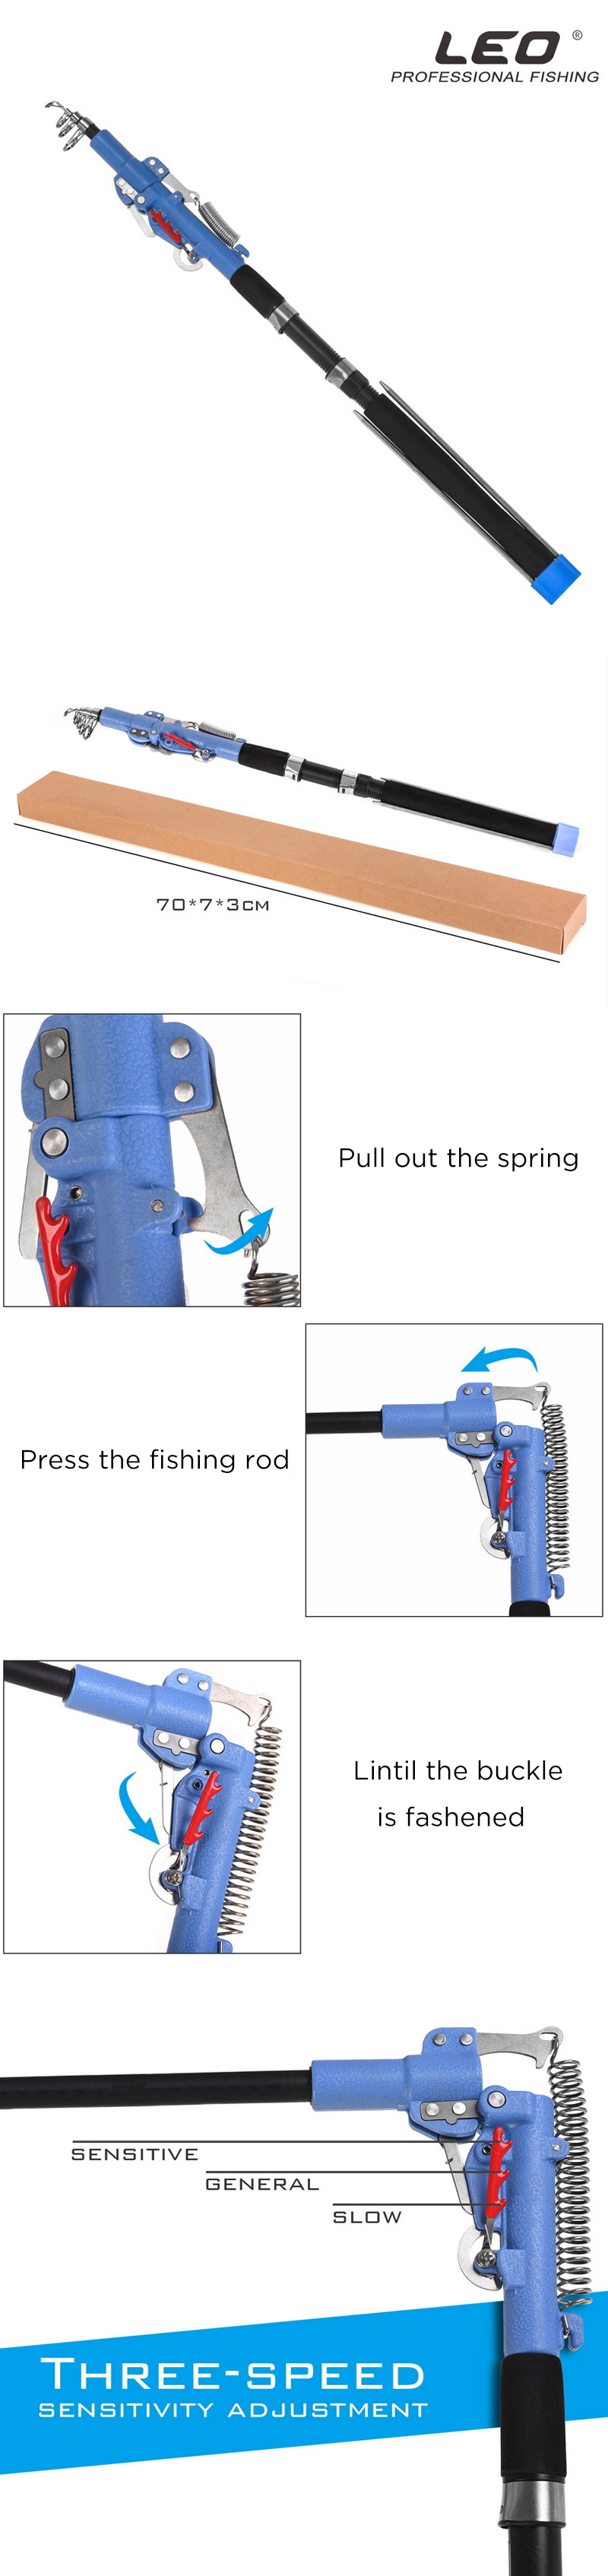 LEO-2124273m-Self-lifting-Fishing-Rod-Nylon-Plastic-Automatic-Fishing-Pole-Outdoor-Fishing-Accessori-1549754-1